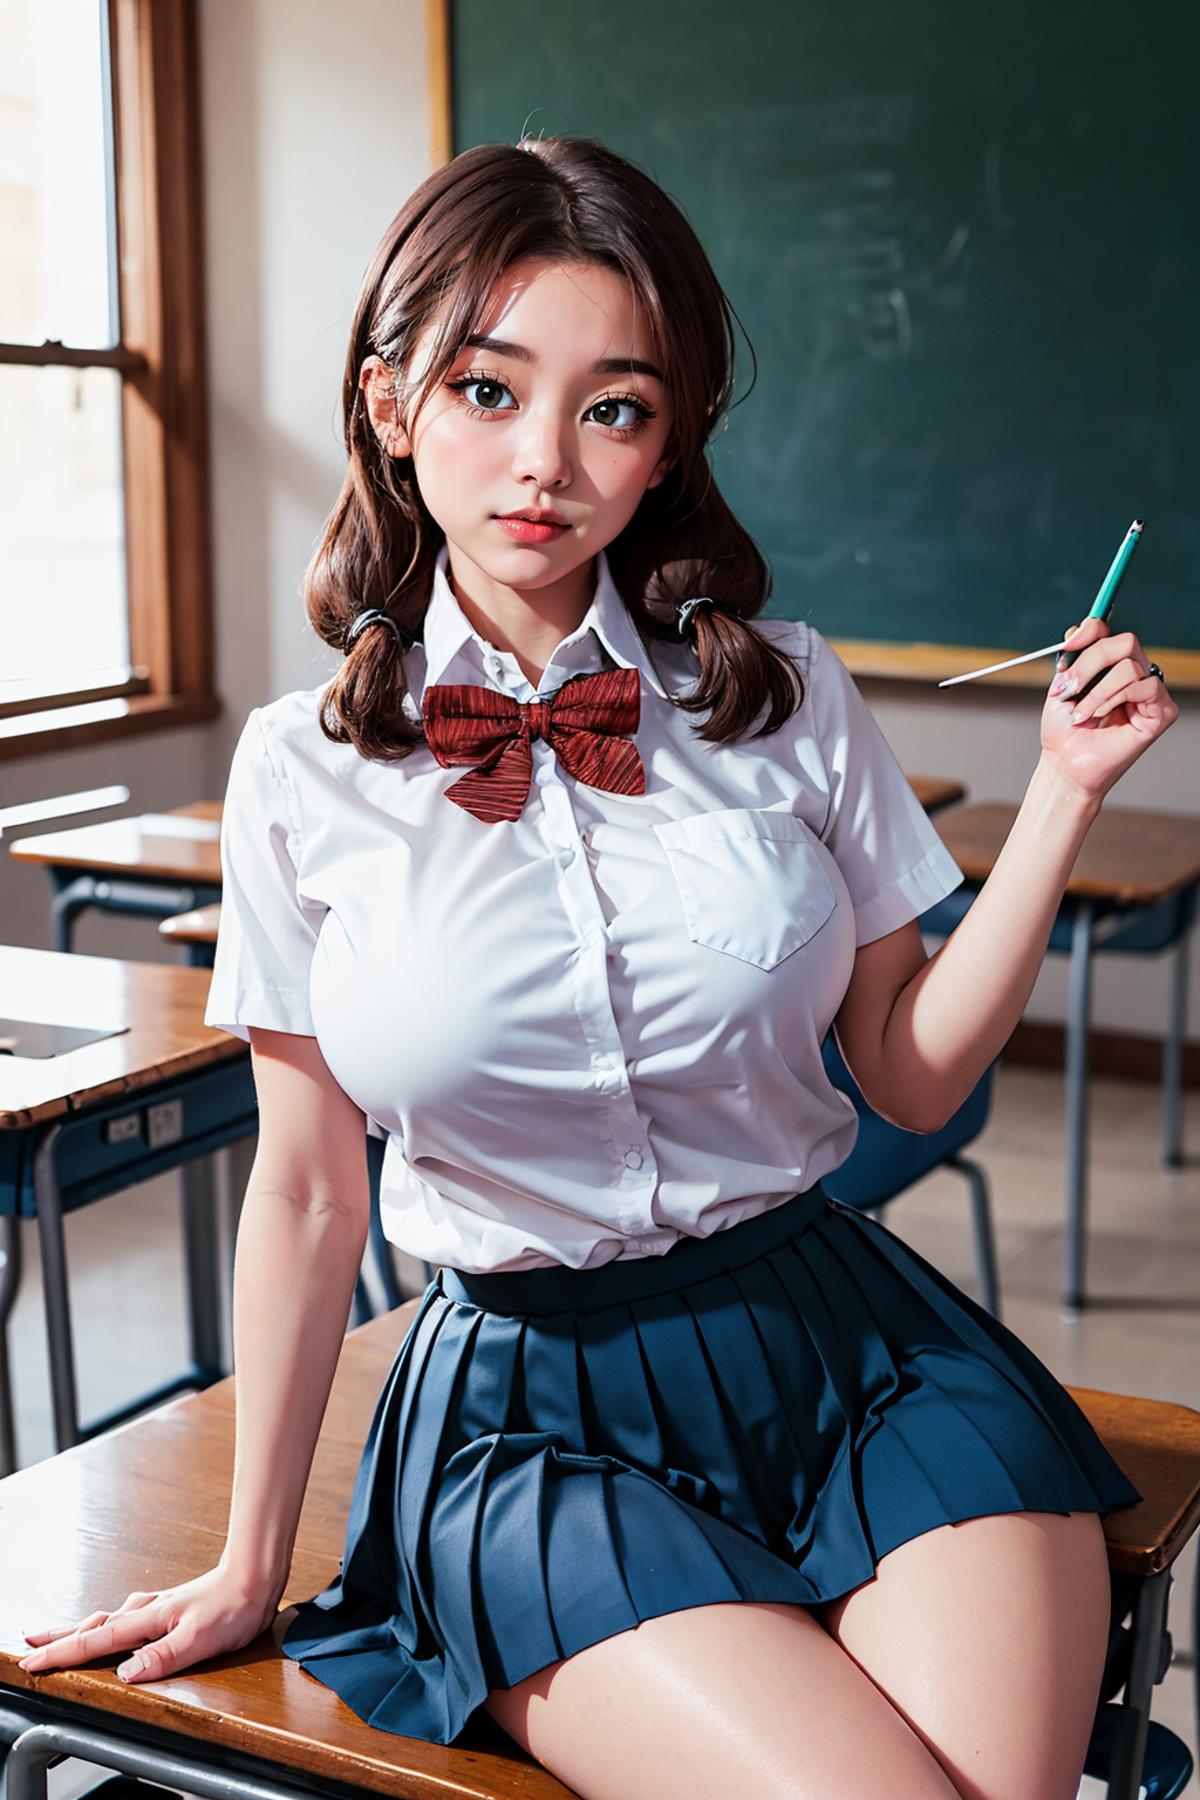 Amano Megumi (Megumi Amano is full of likes) / 天野 めぐみ (天野めぐみはスキだらけ) image by Darknoice